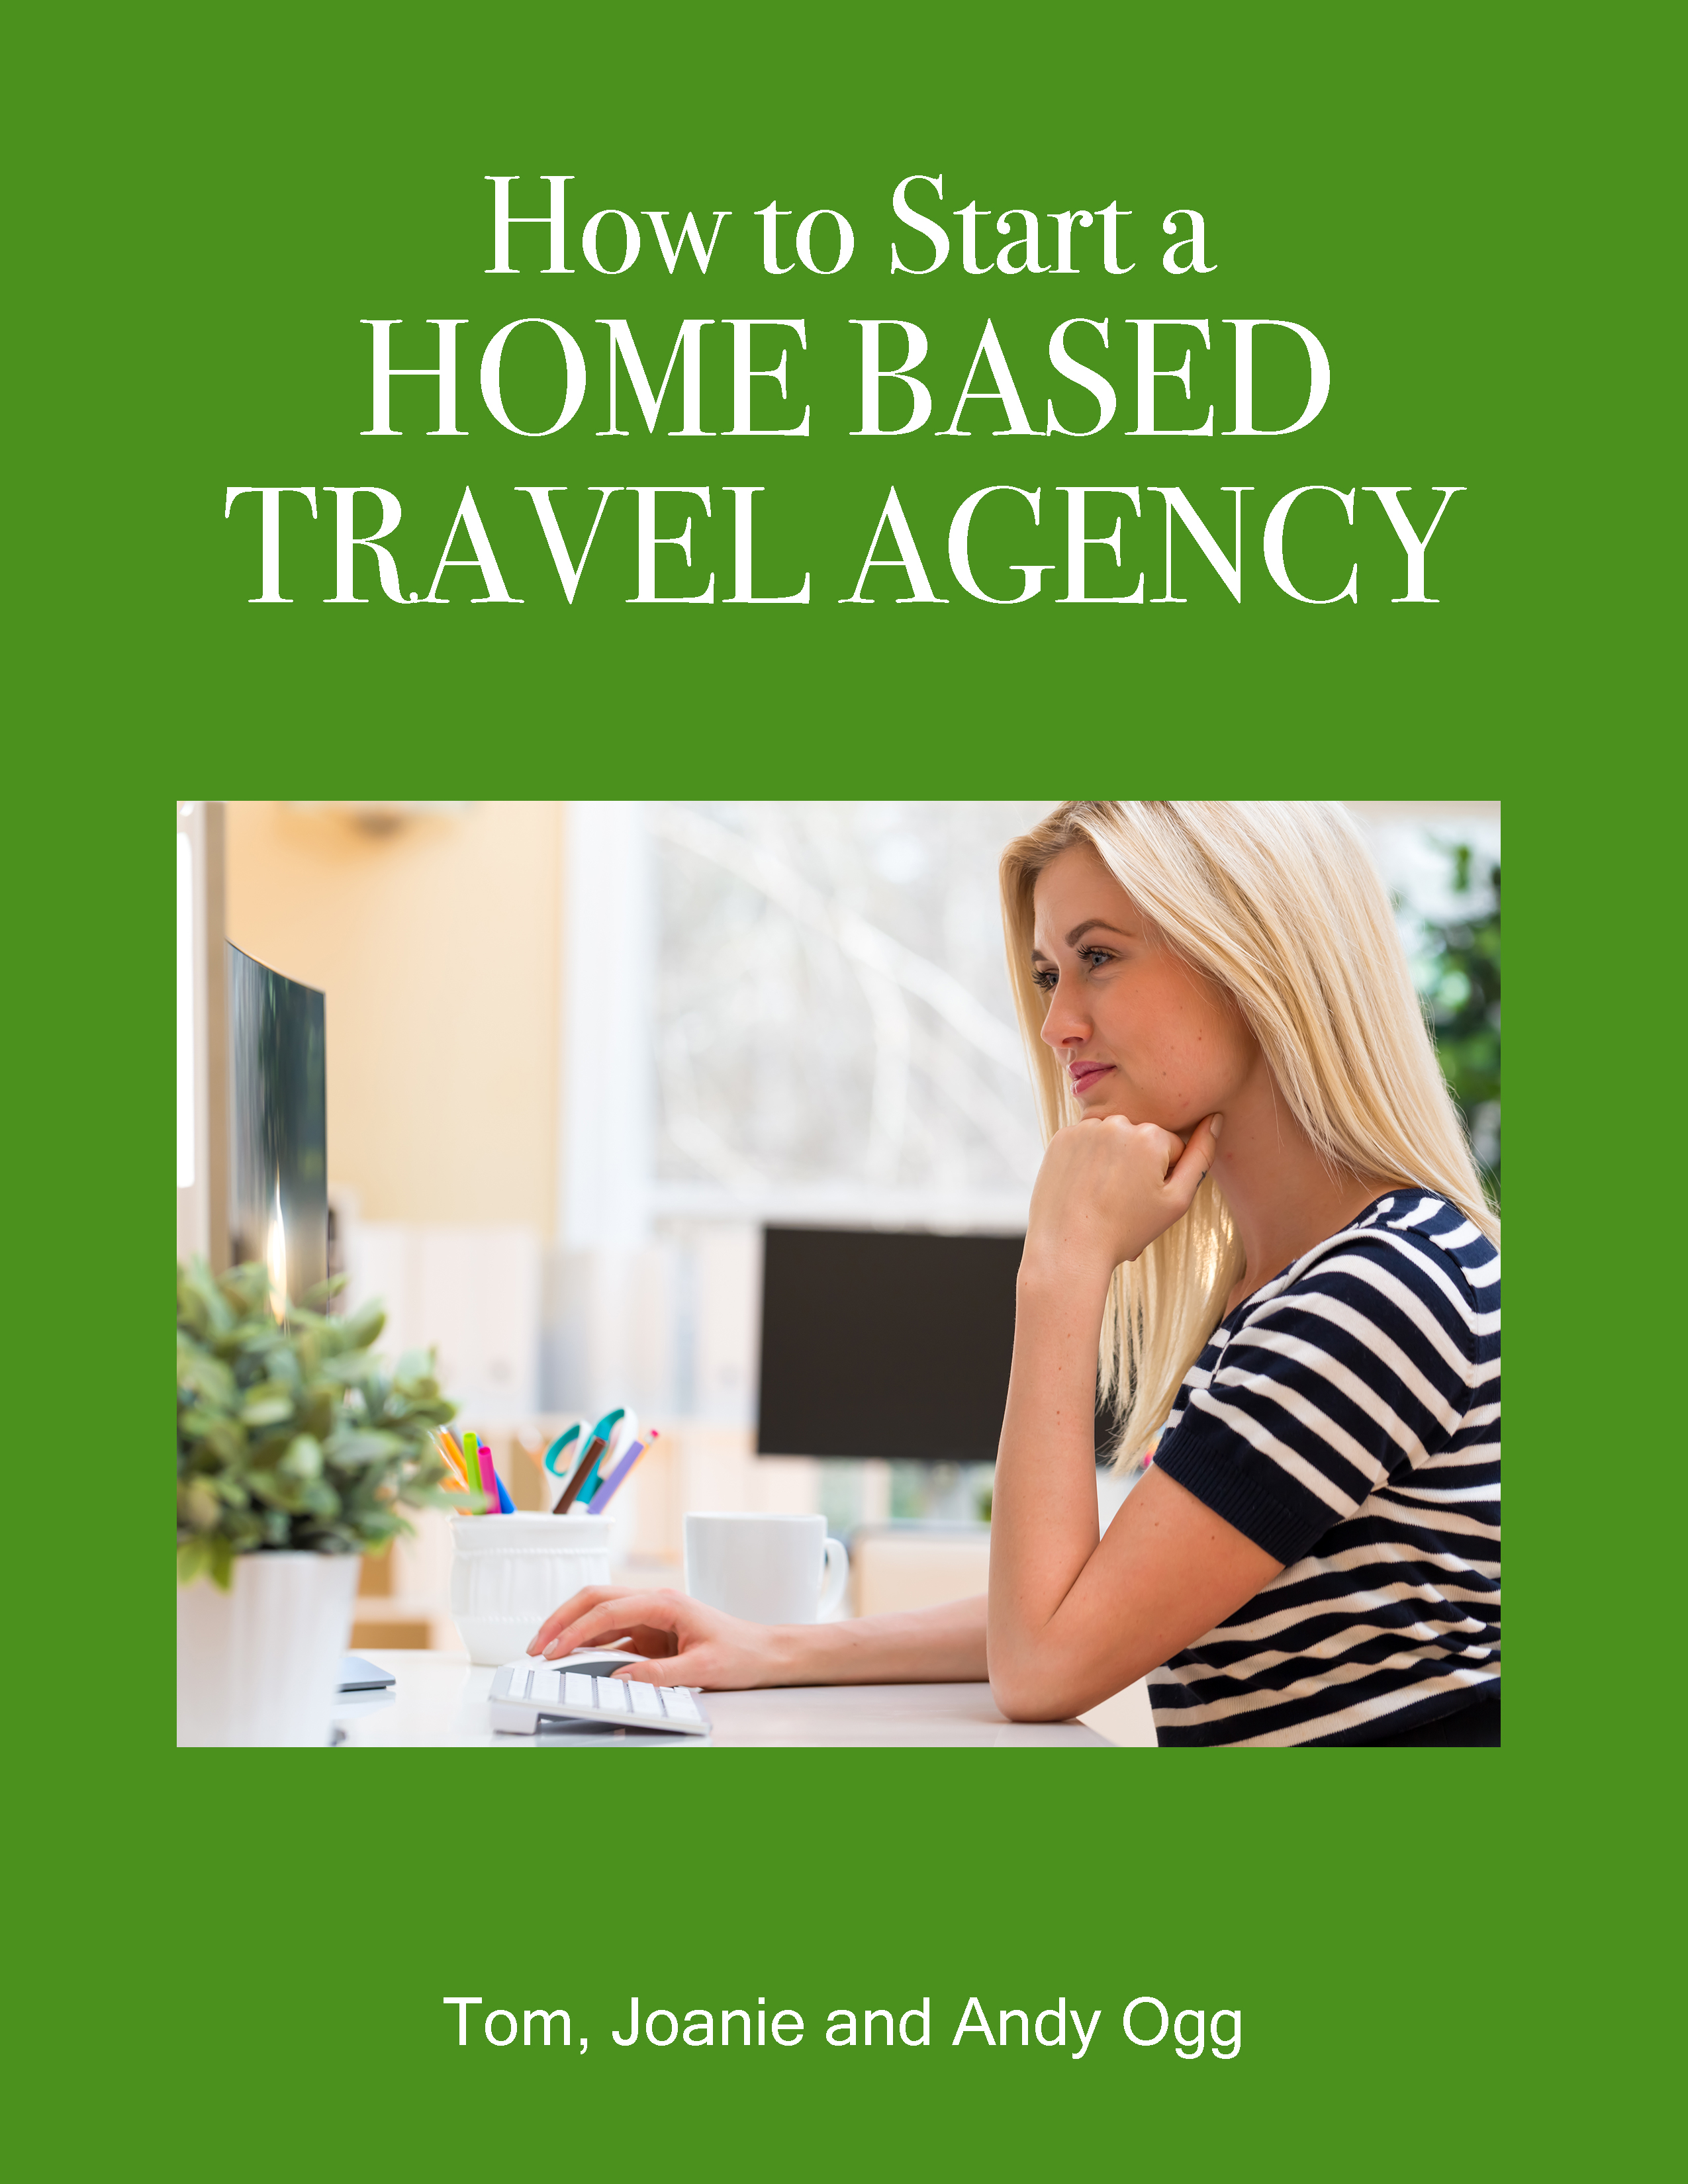 based travel agency